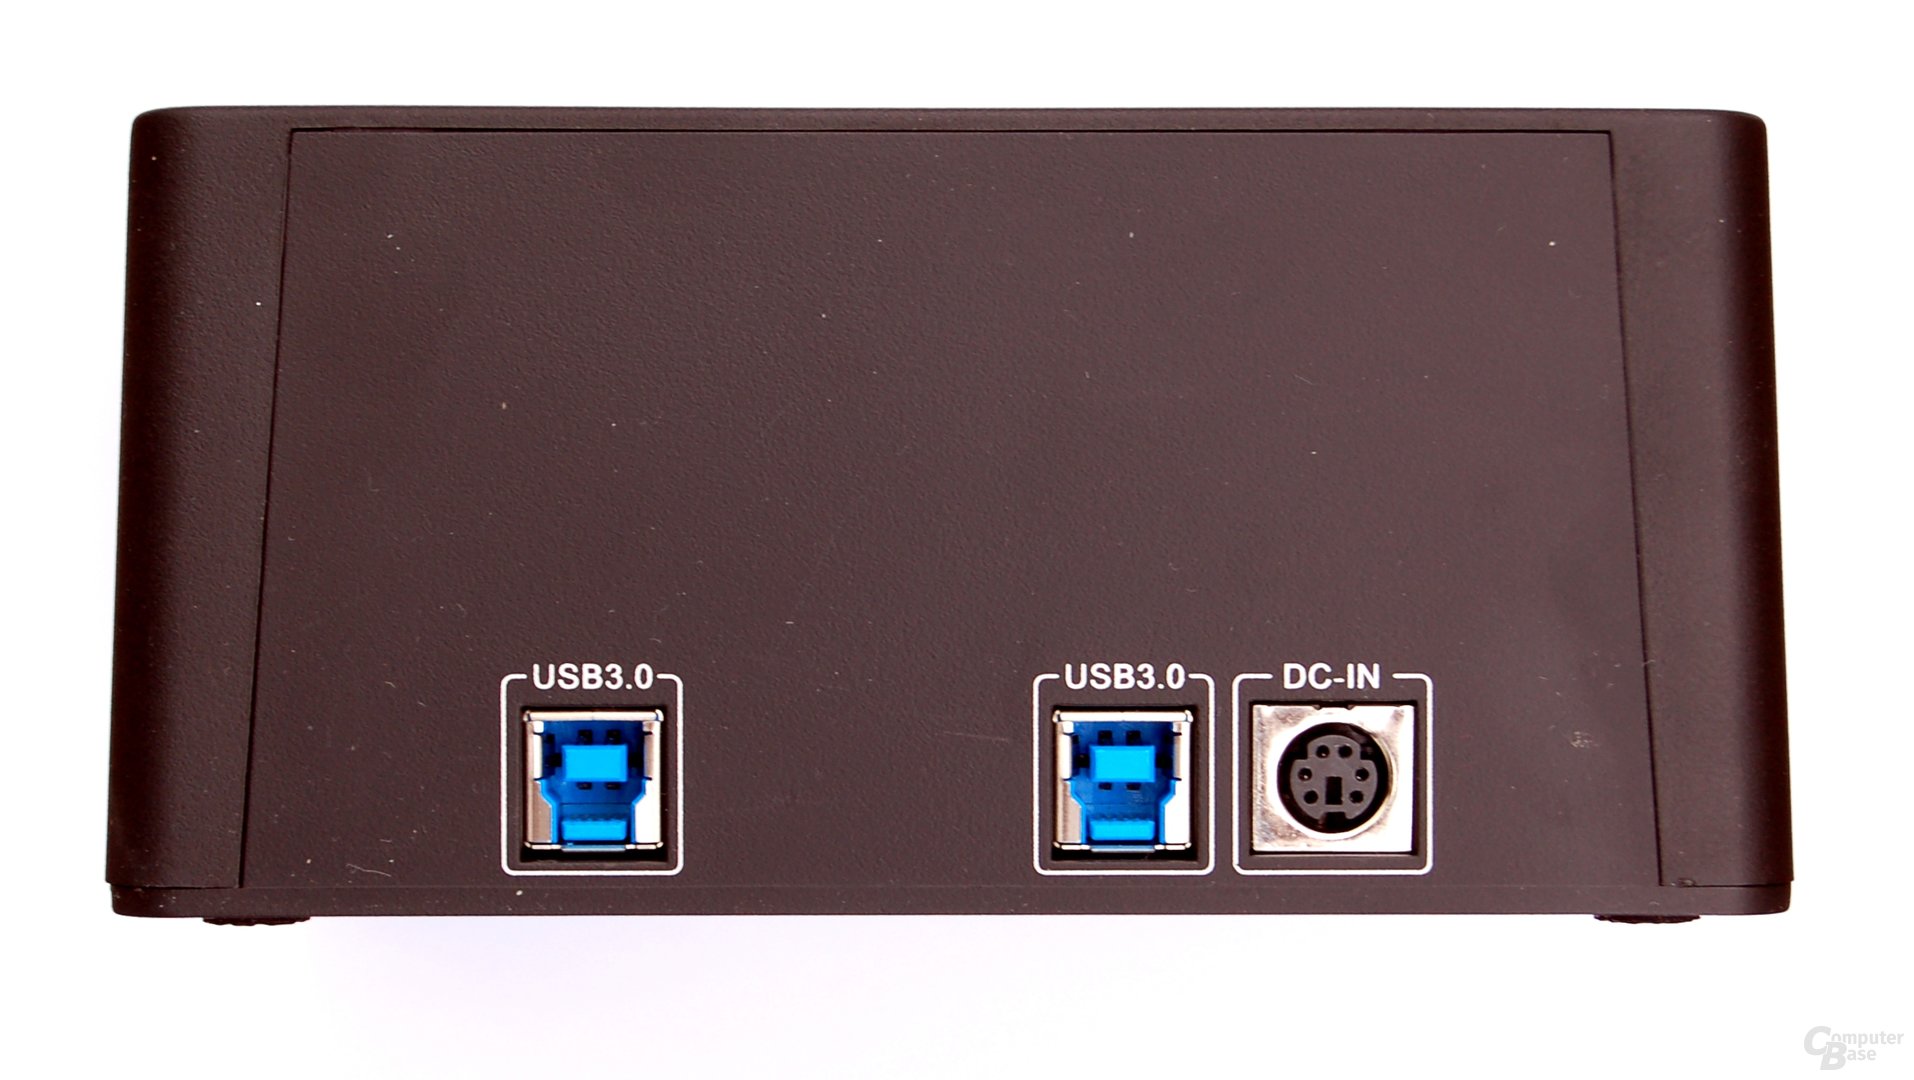 Anschlüsse des Sharkoon SATA Quickport Duo USB 3.0